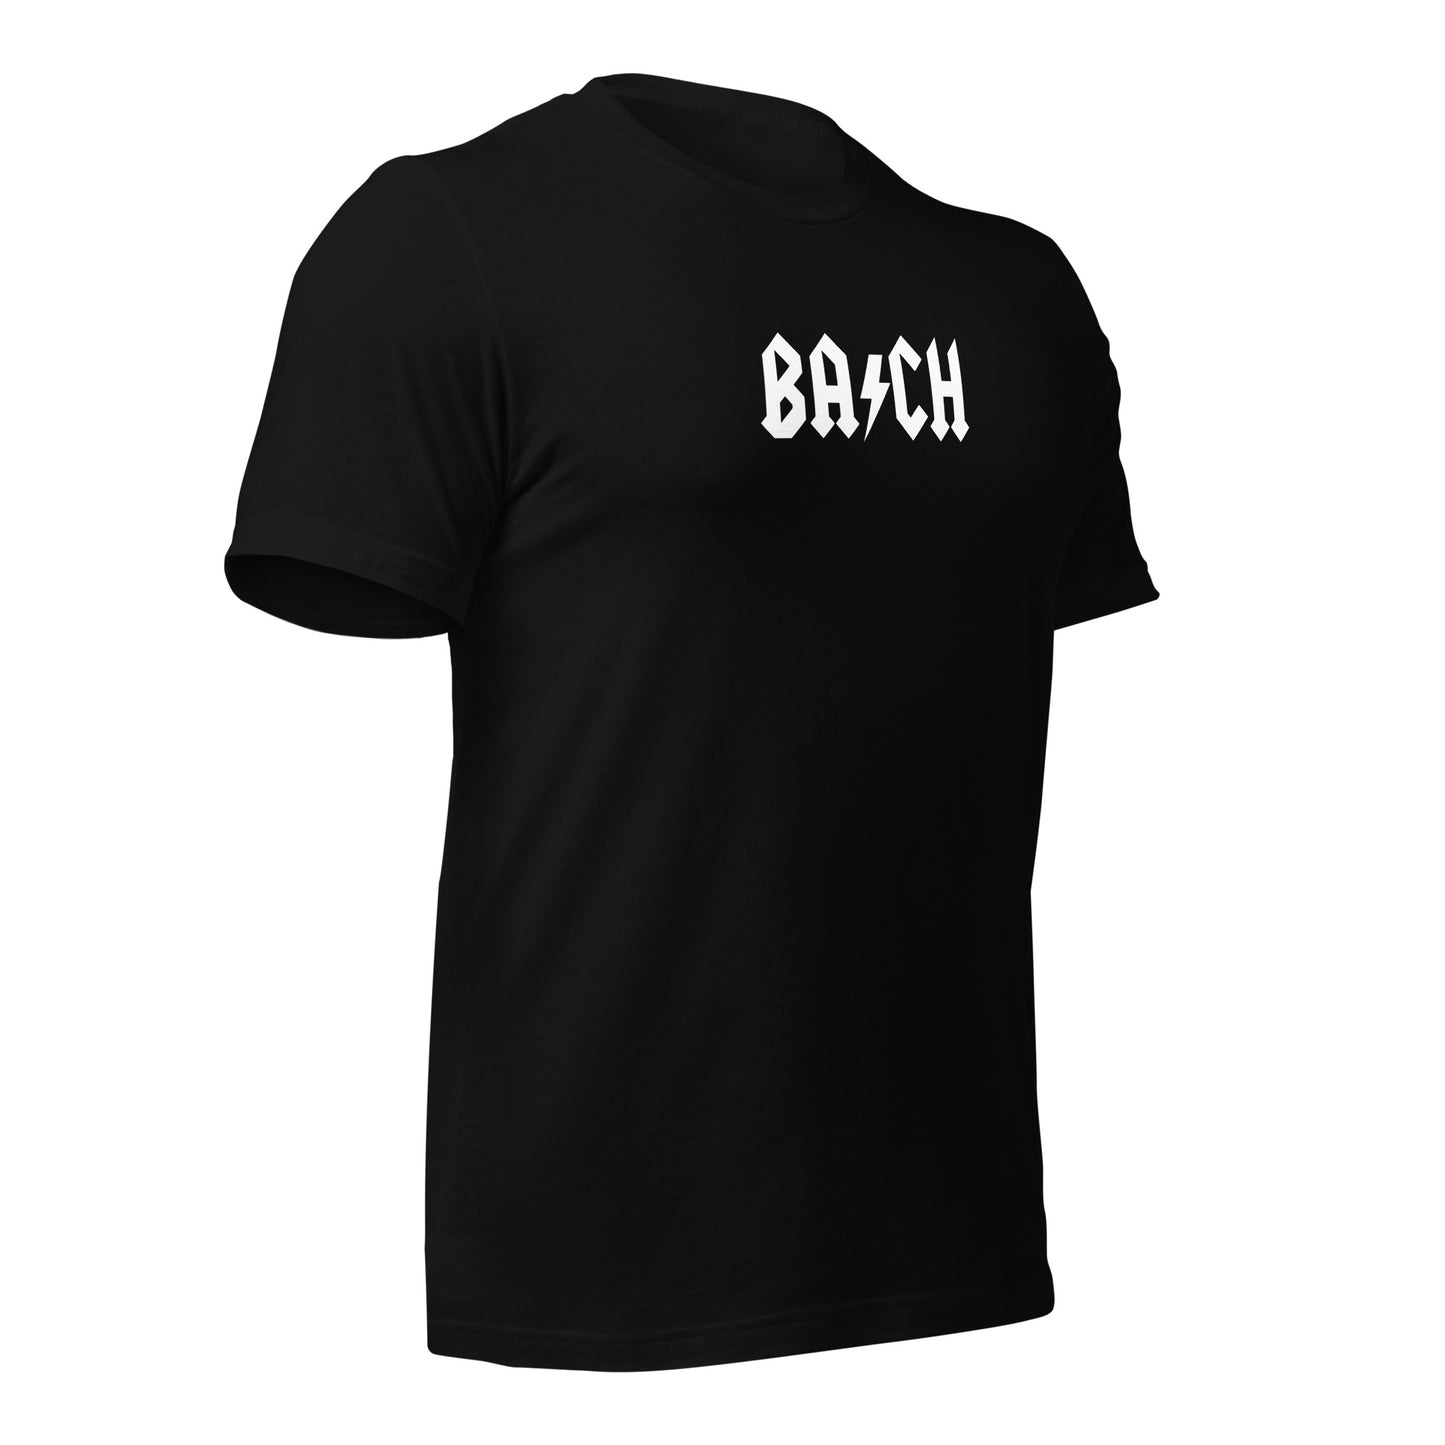 J. S. Bach - Band Tees Unisex t-shirt